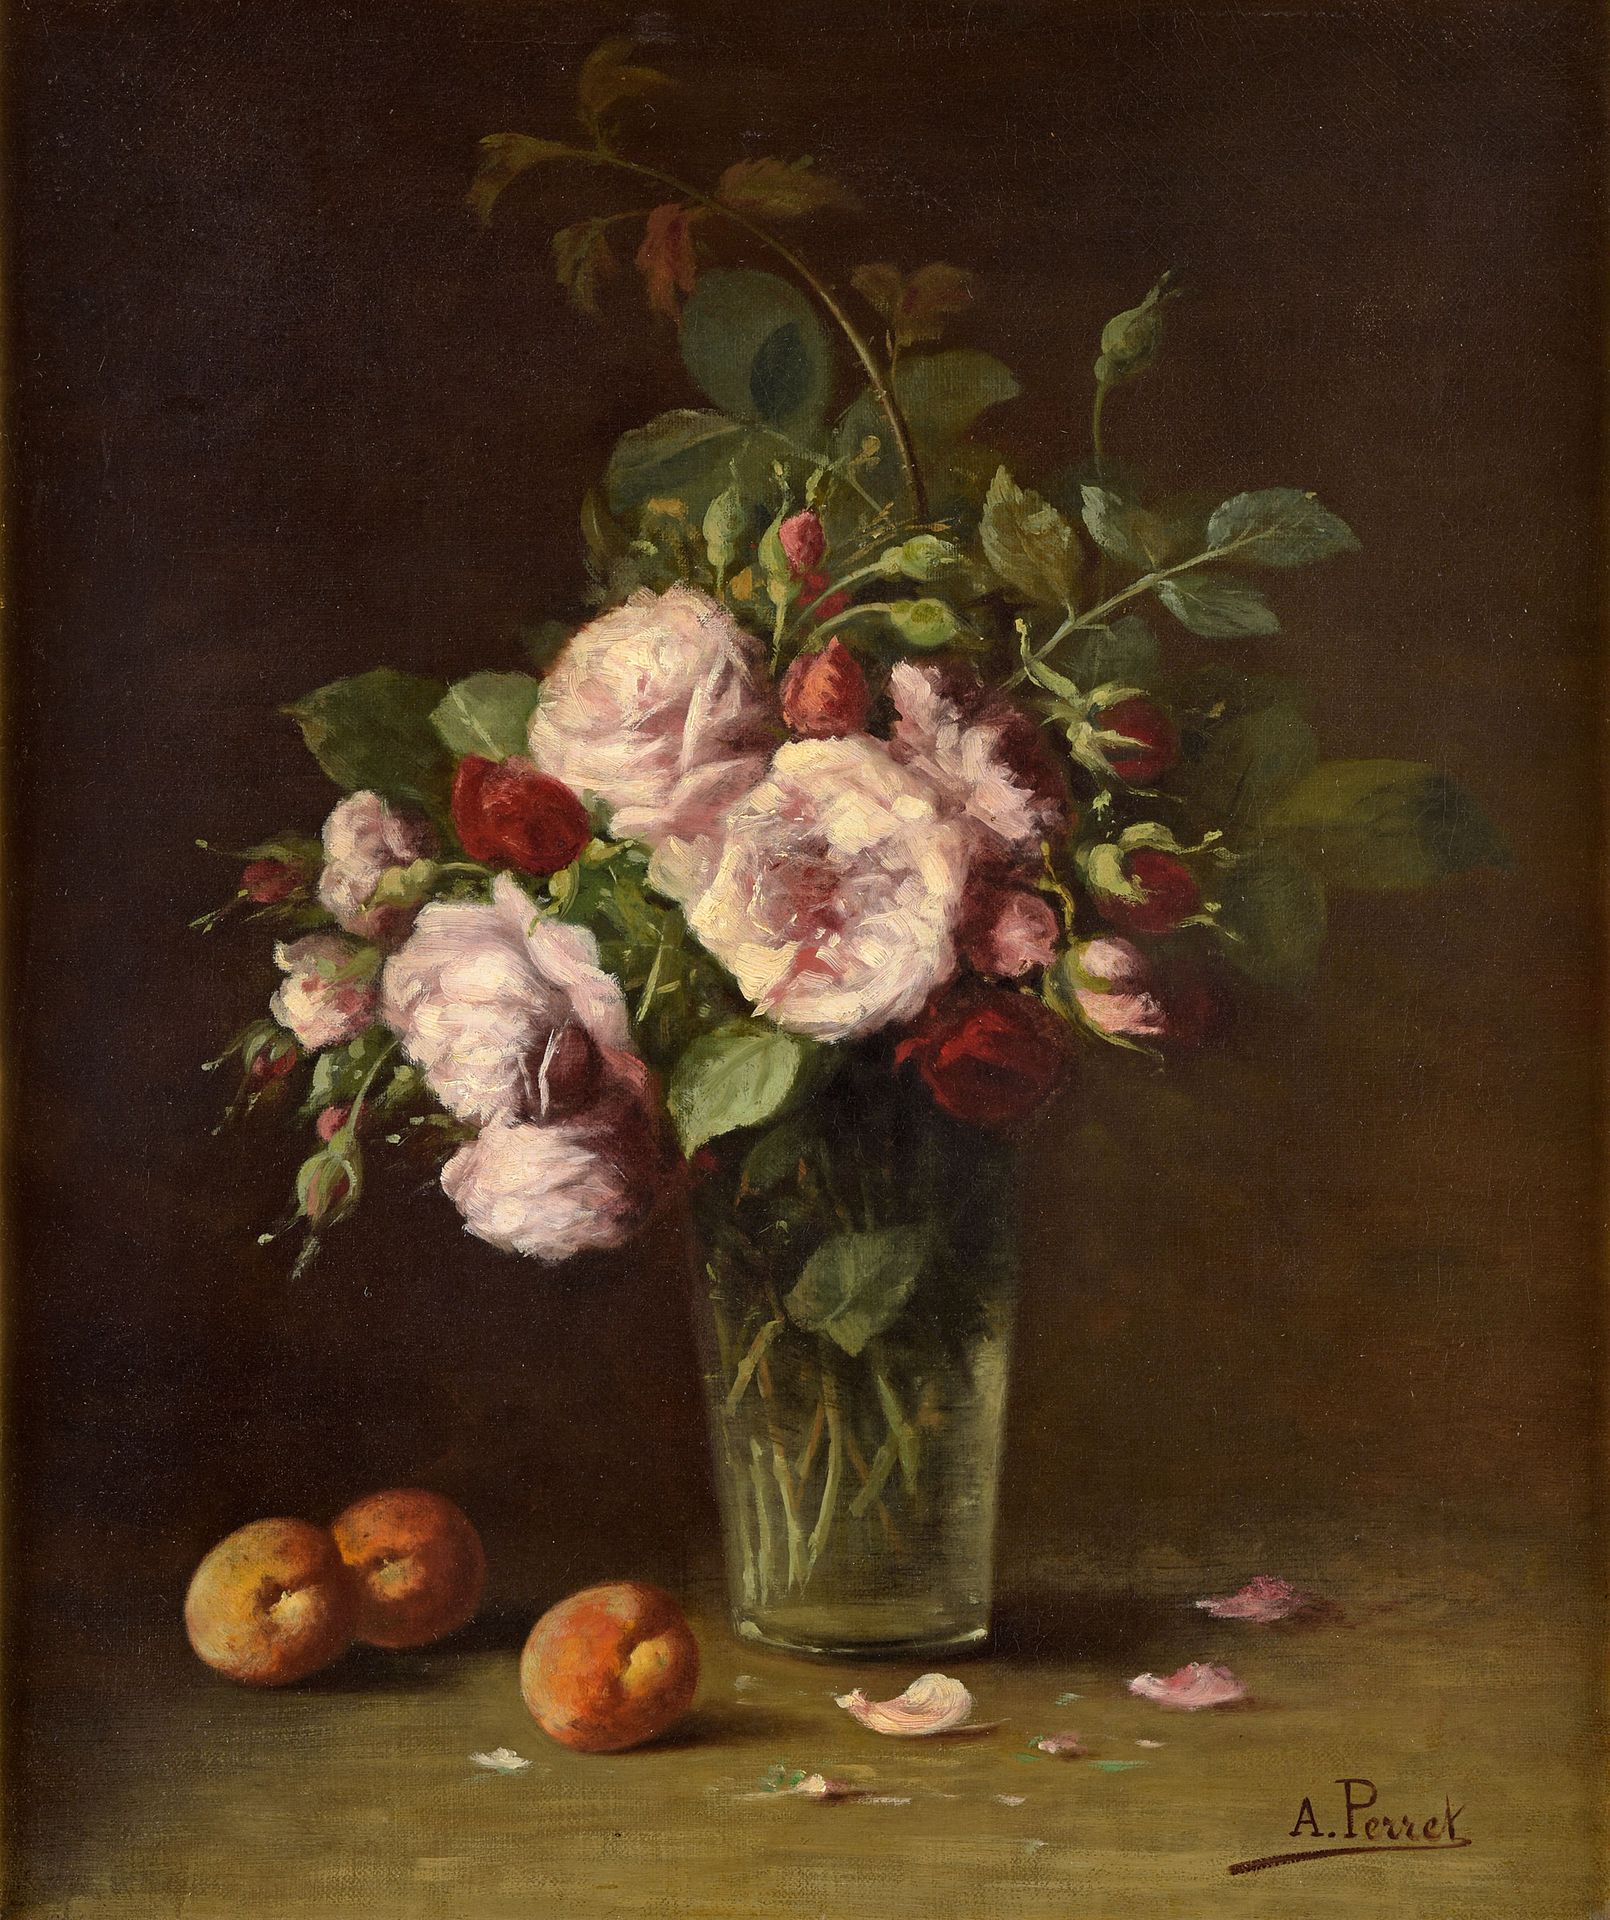 Perret, Aimé Perret, Aimé1847 Lyon - 1927 Paris
玫瑰和杏子的静物画。
签名。布面油画，56 x 46厘米。